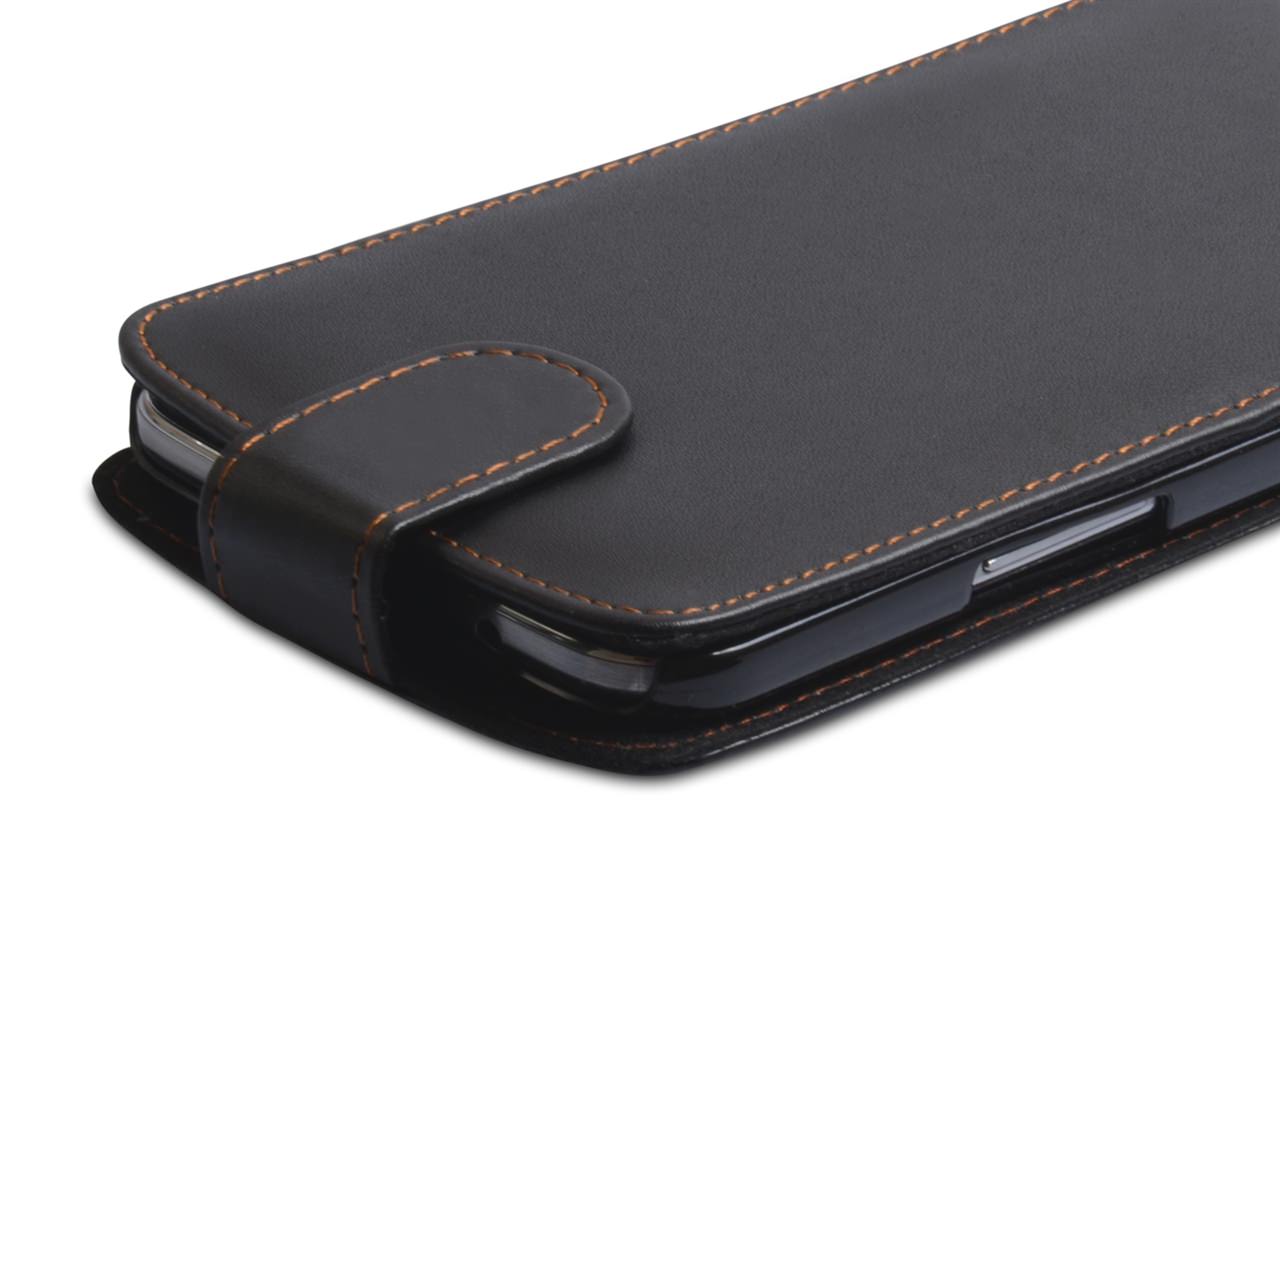 YouSave Samsung Galaxy Mega 6.3 Leather Effect Flip Case - Black 